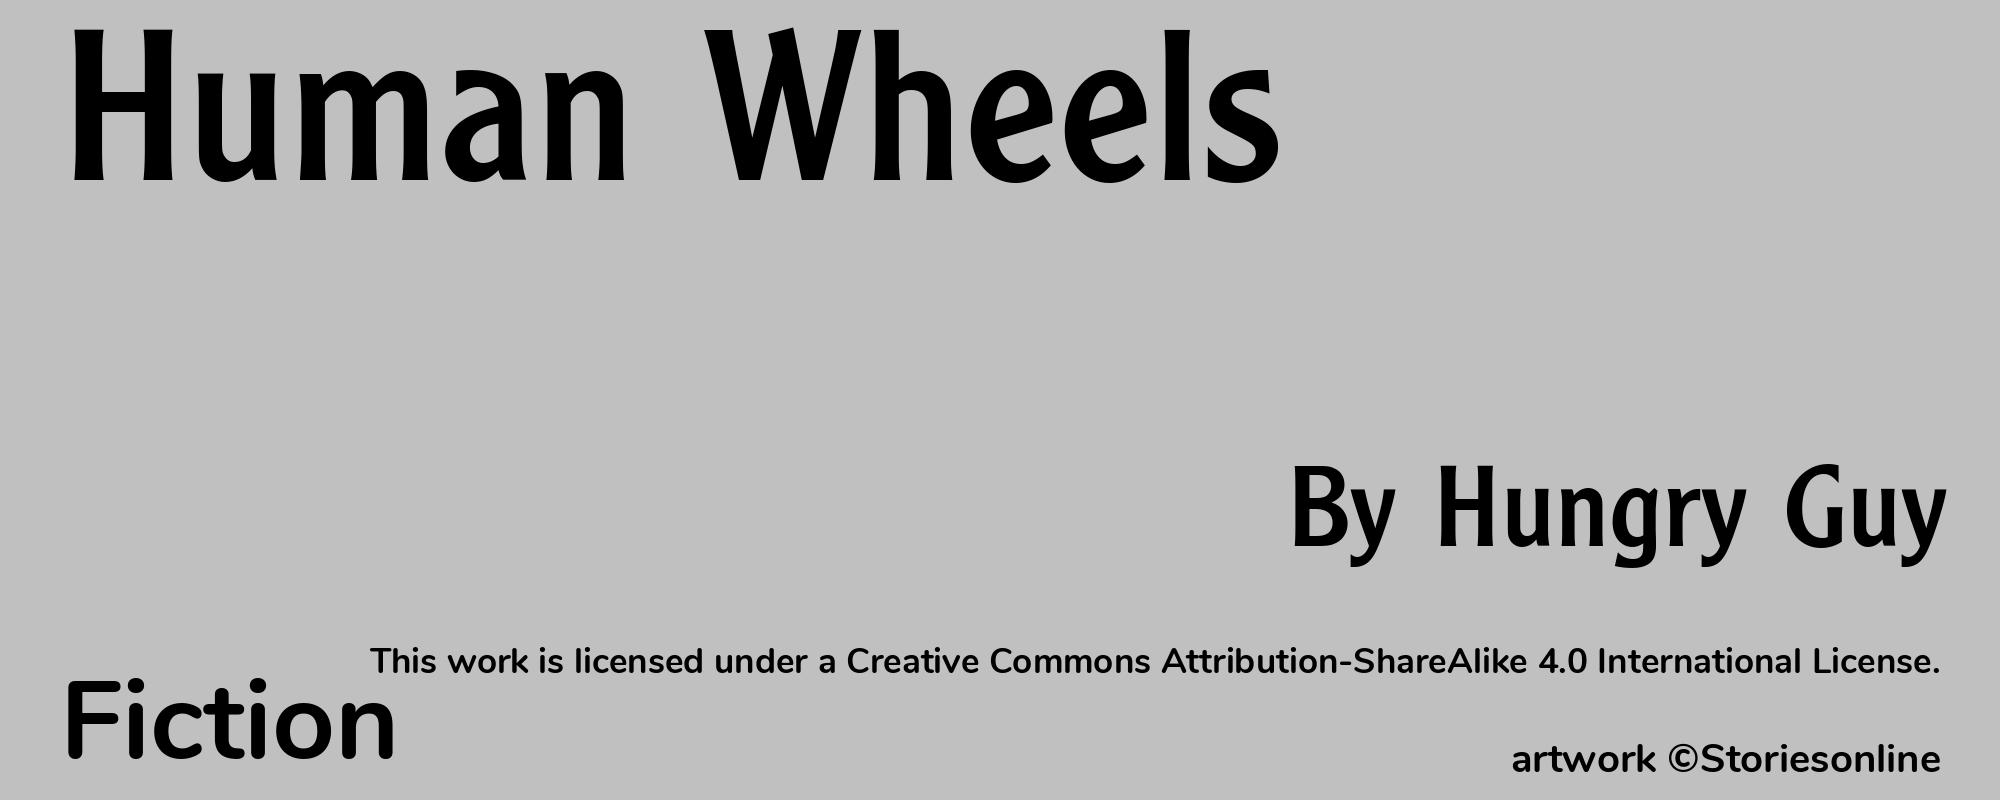 Human Wheels - Cover